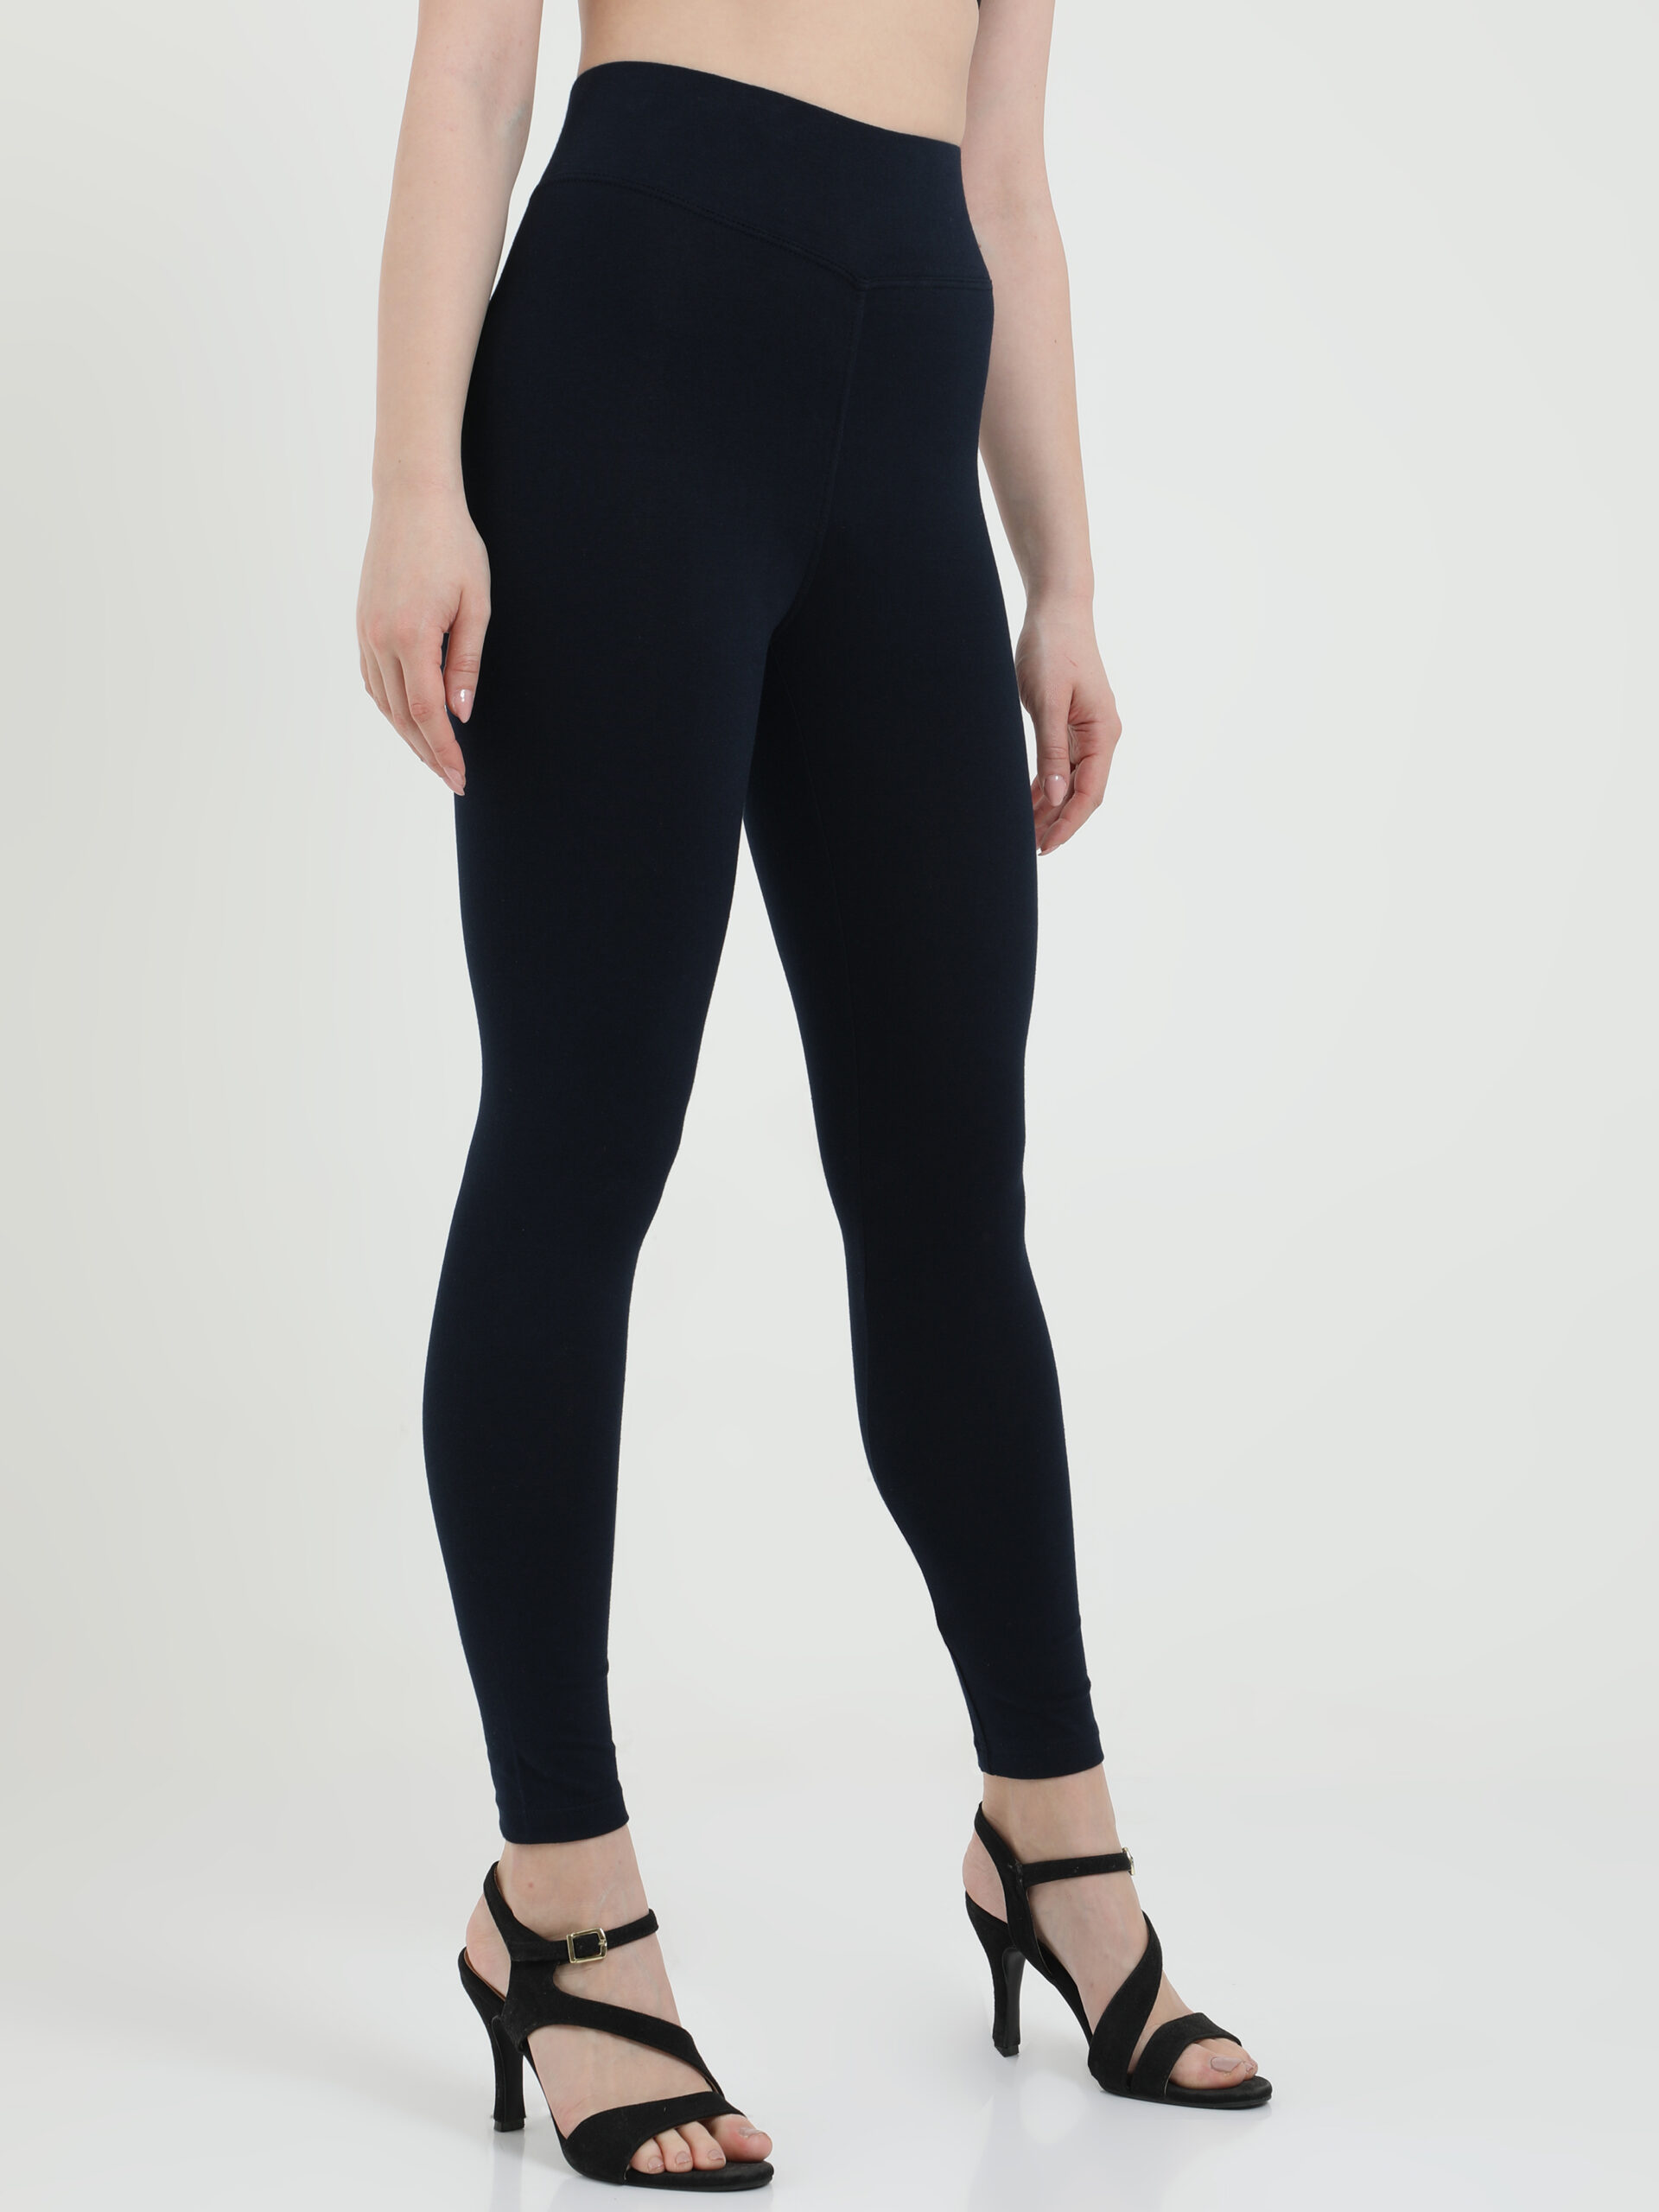 Navy blue leggings for women Compression pant high waist - Belore Slims